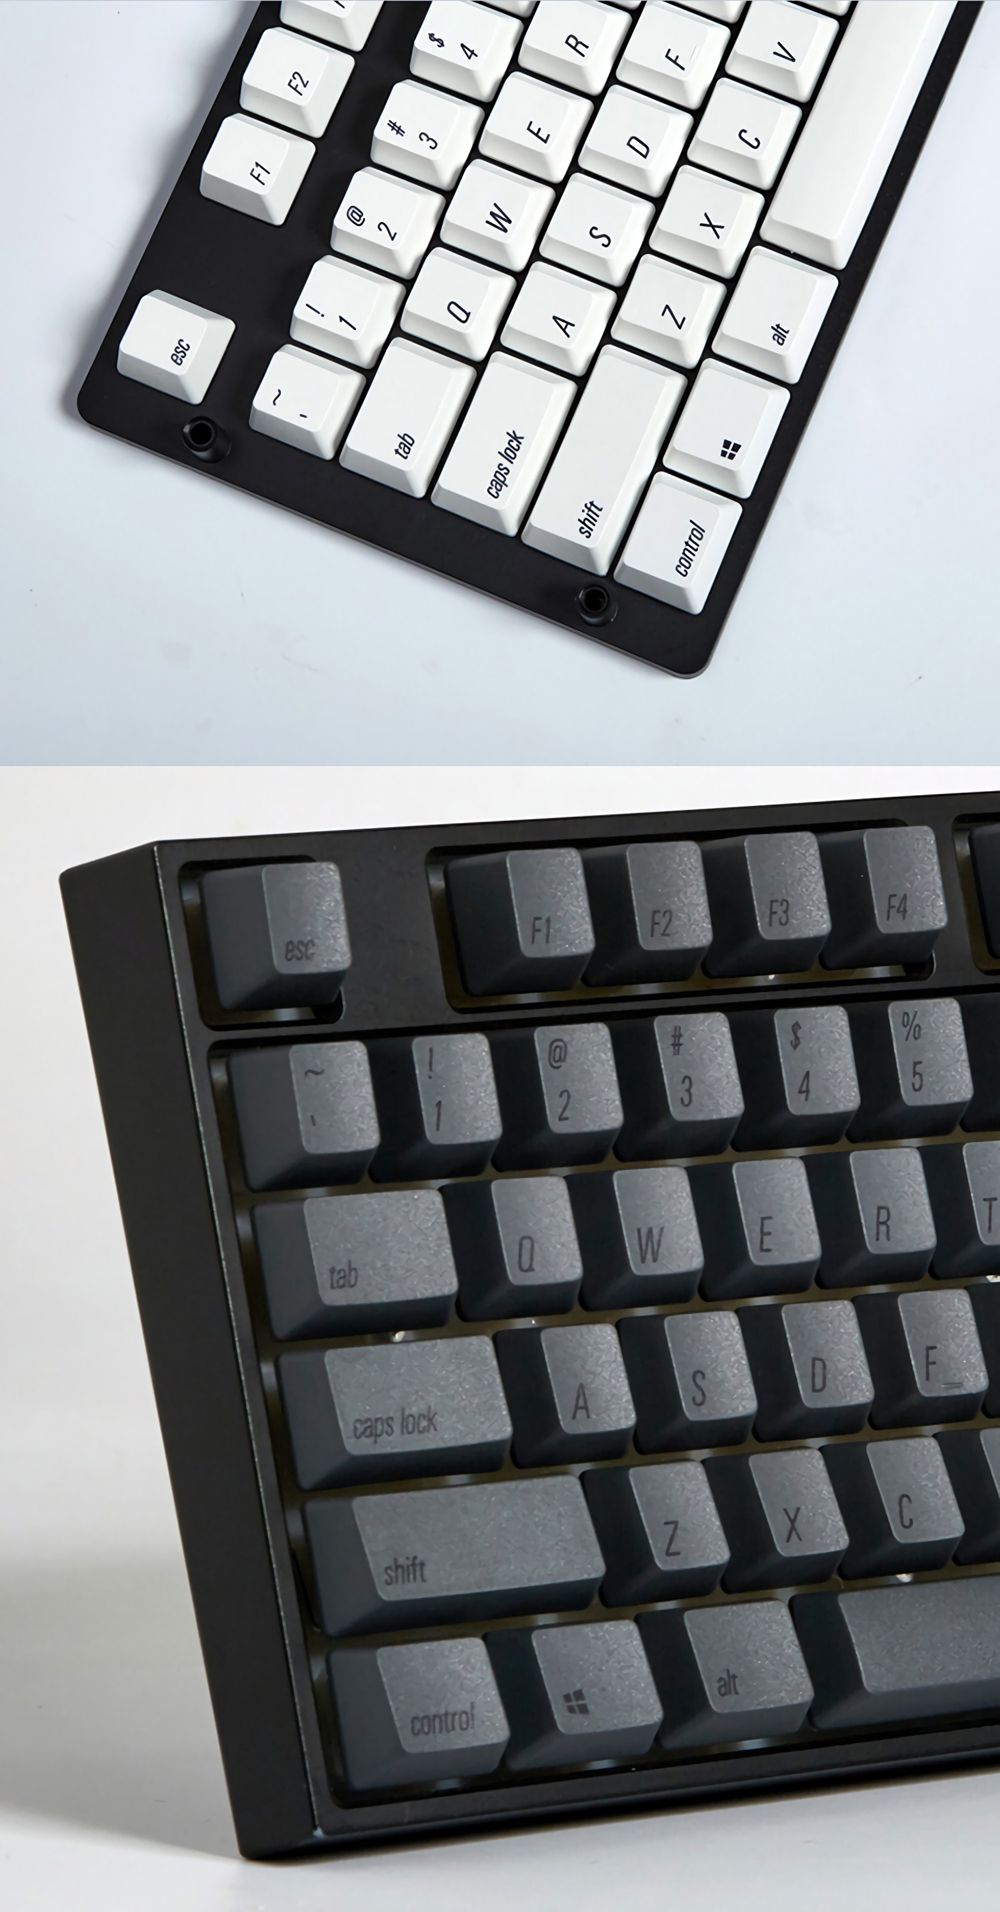 Magicforce-108-Key-UV-Light-Color-Dye-sub-PBT-Keycaps-Keycap-Set-for-Mechanical-Keyboard-1400156